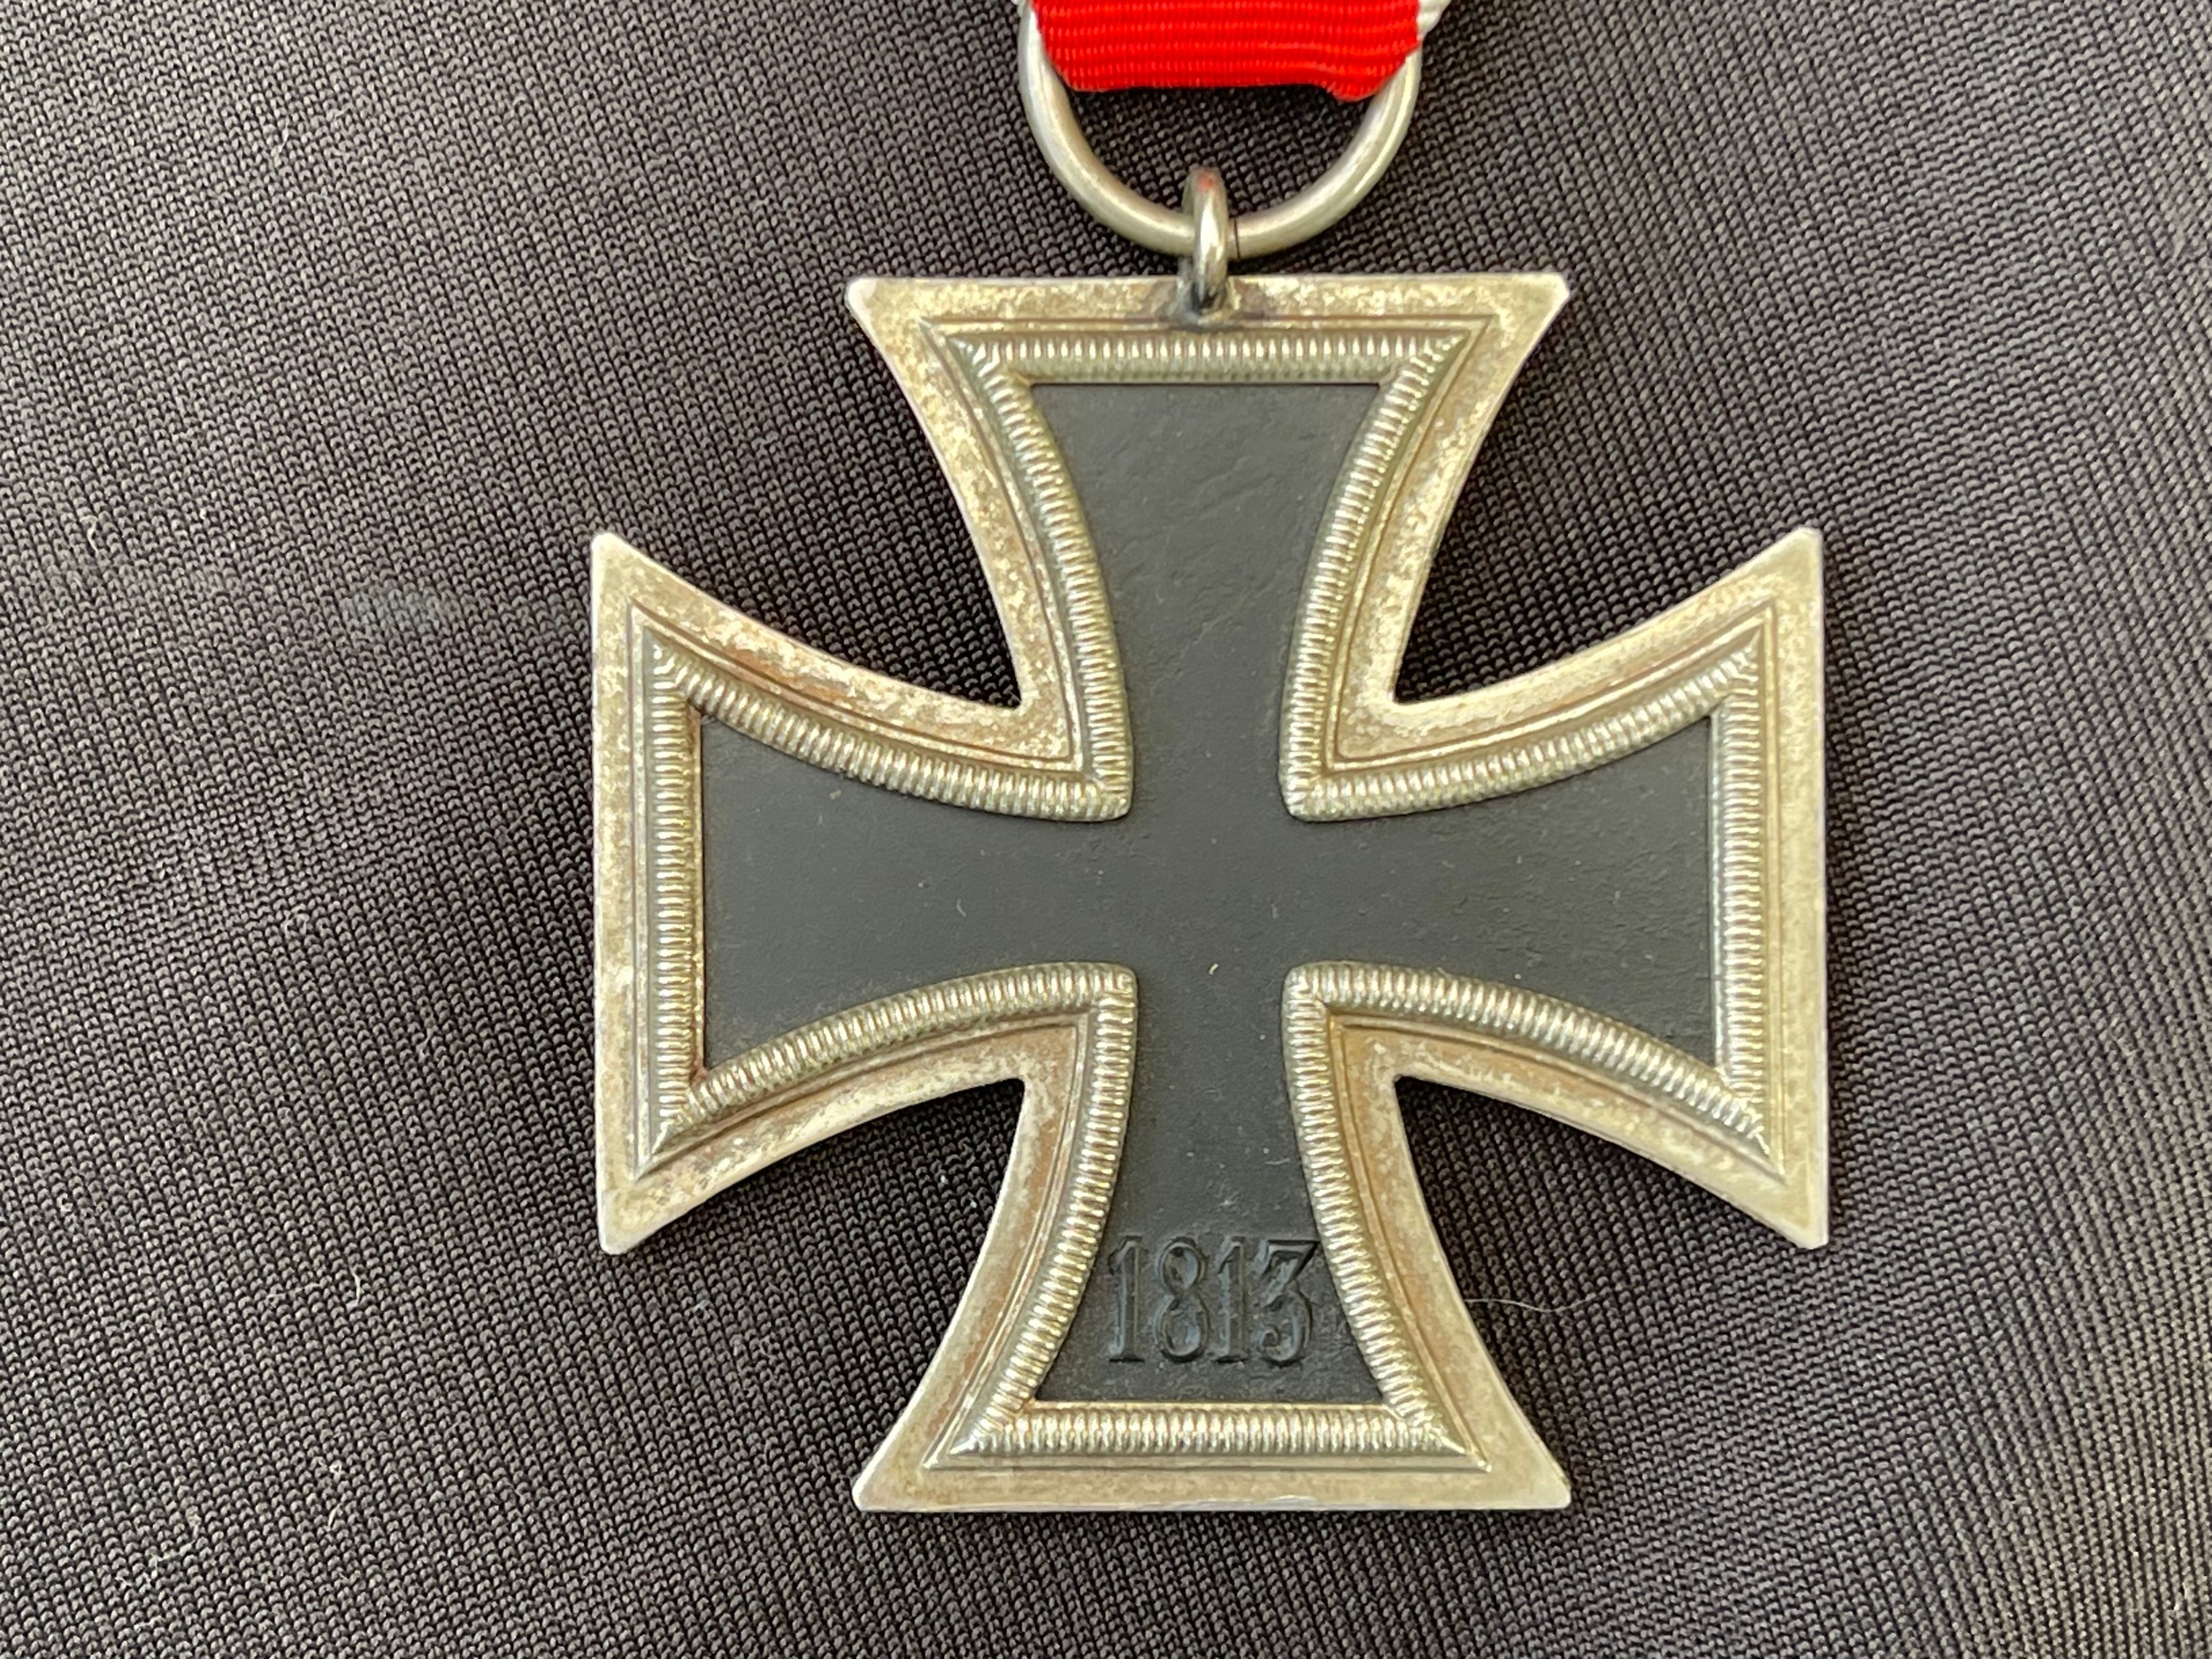 WW2 Third Reich Eisernes Kreuz 2. Klasse. Iron Cross 2nd Class 1939. No makers mark to ring. - Image 4 of 8